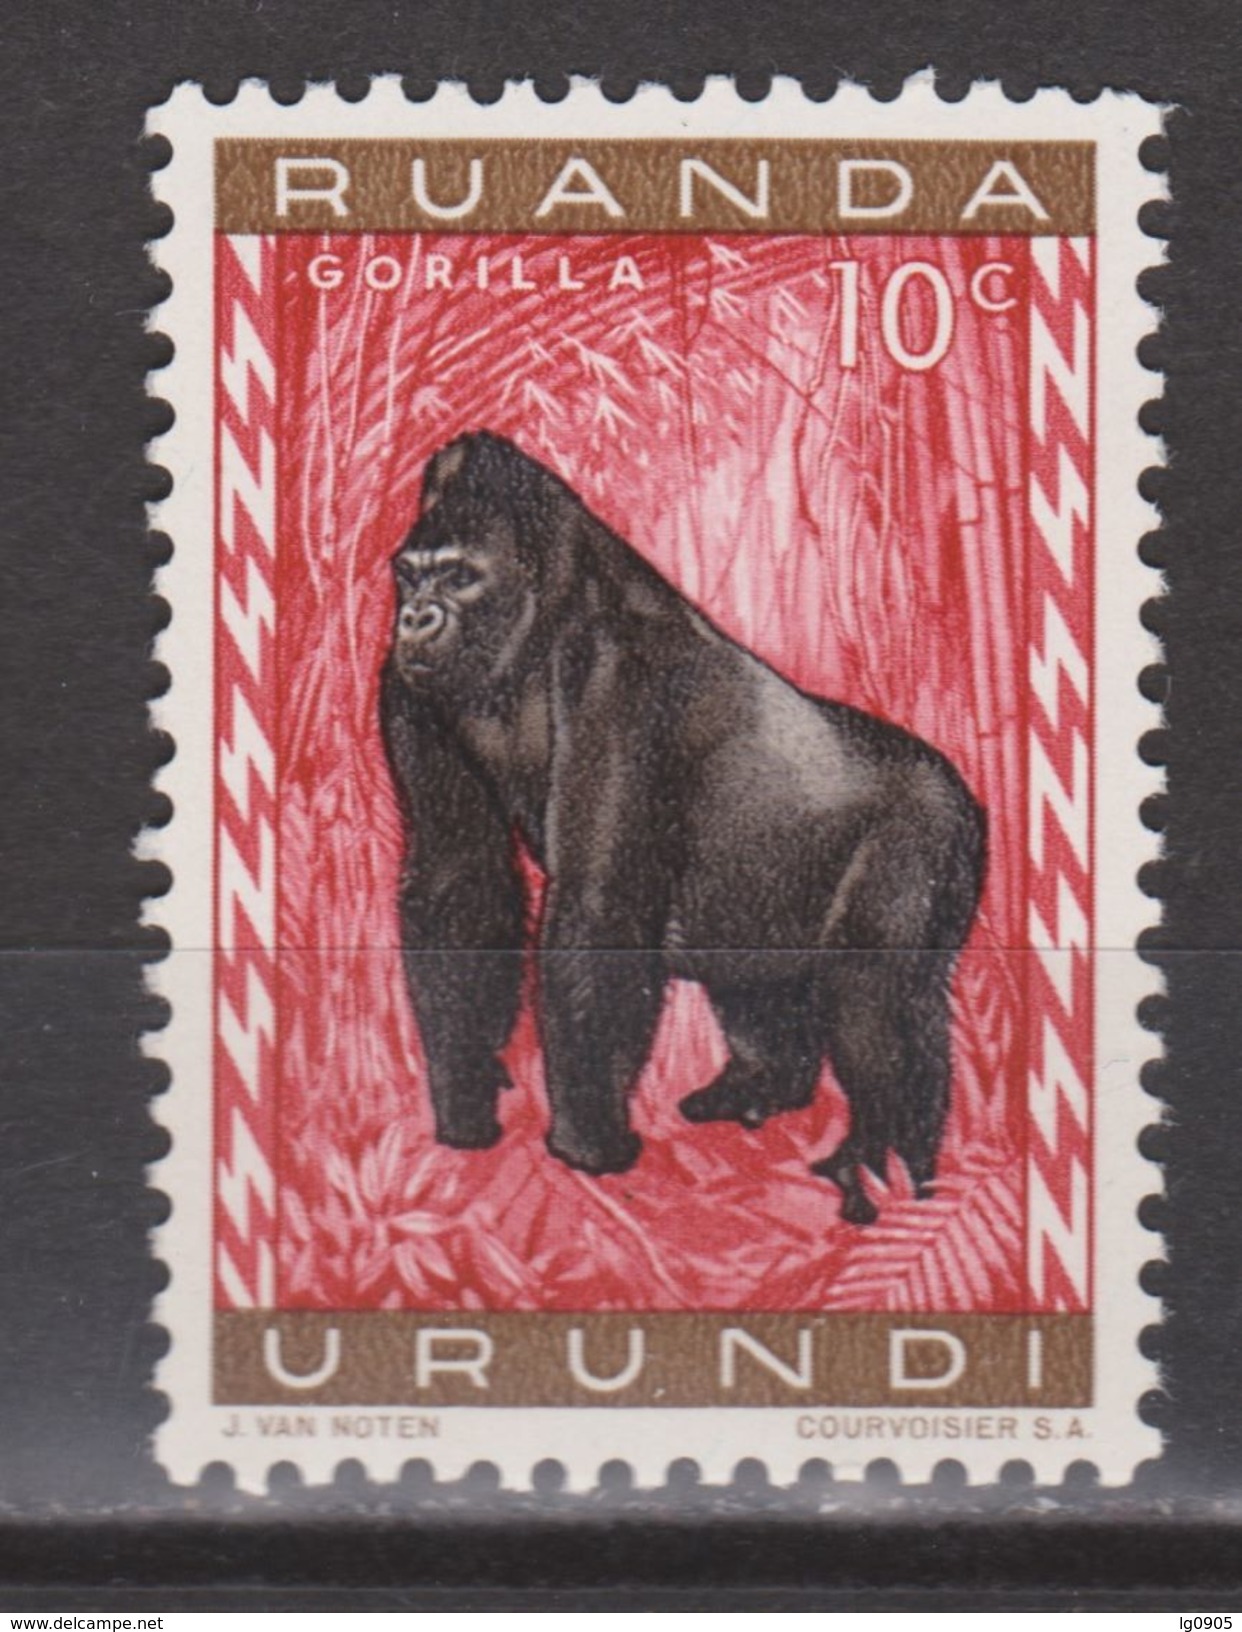 Rwanda MNH ; Gorilla NOW MANY ANIMAL STAMPS FOR SALE - Gorillas